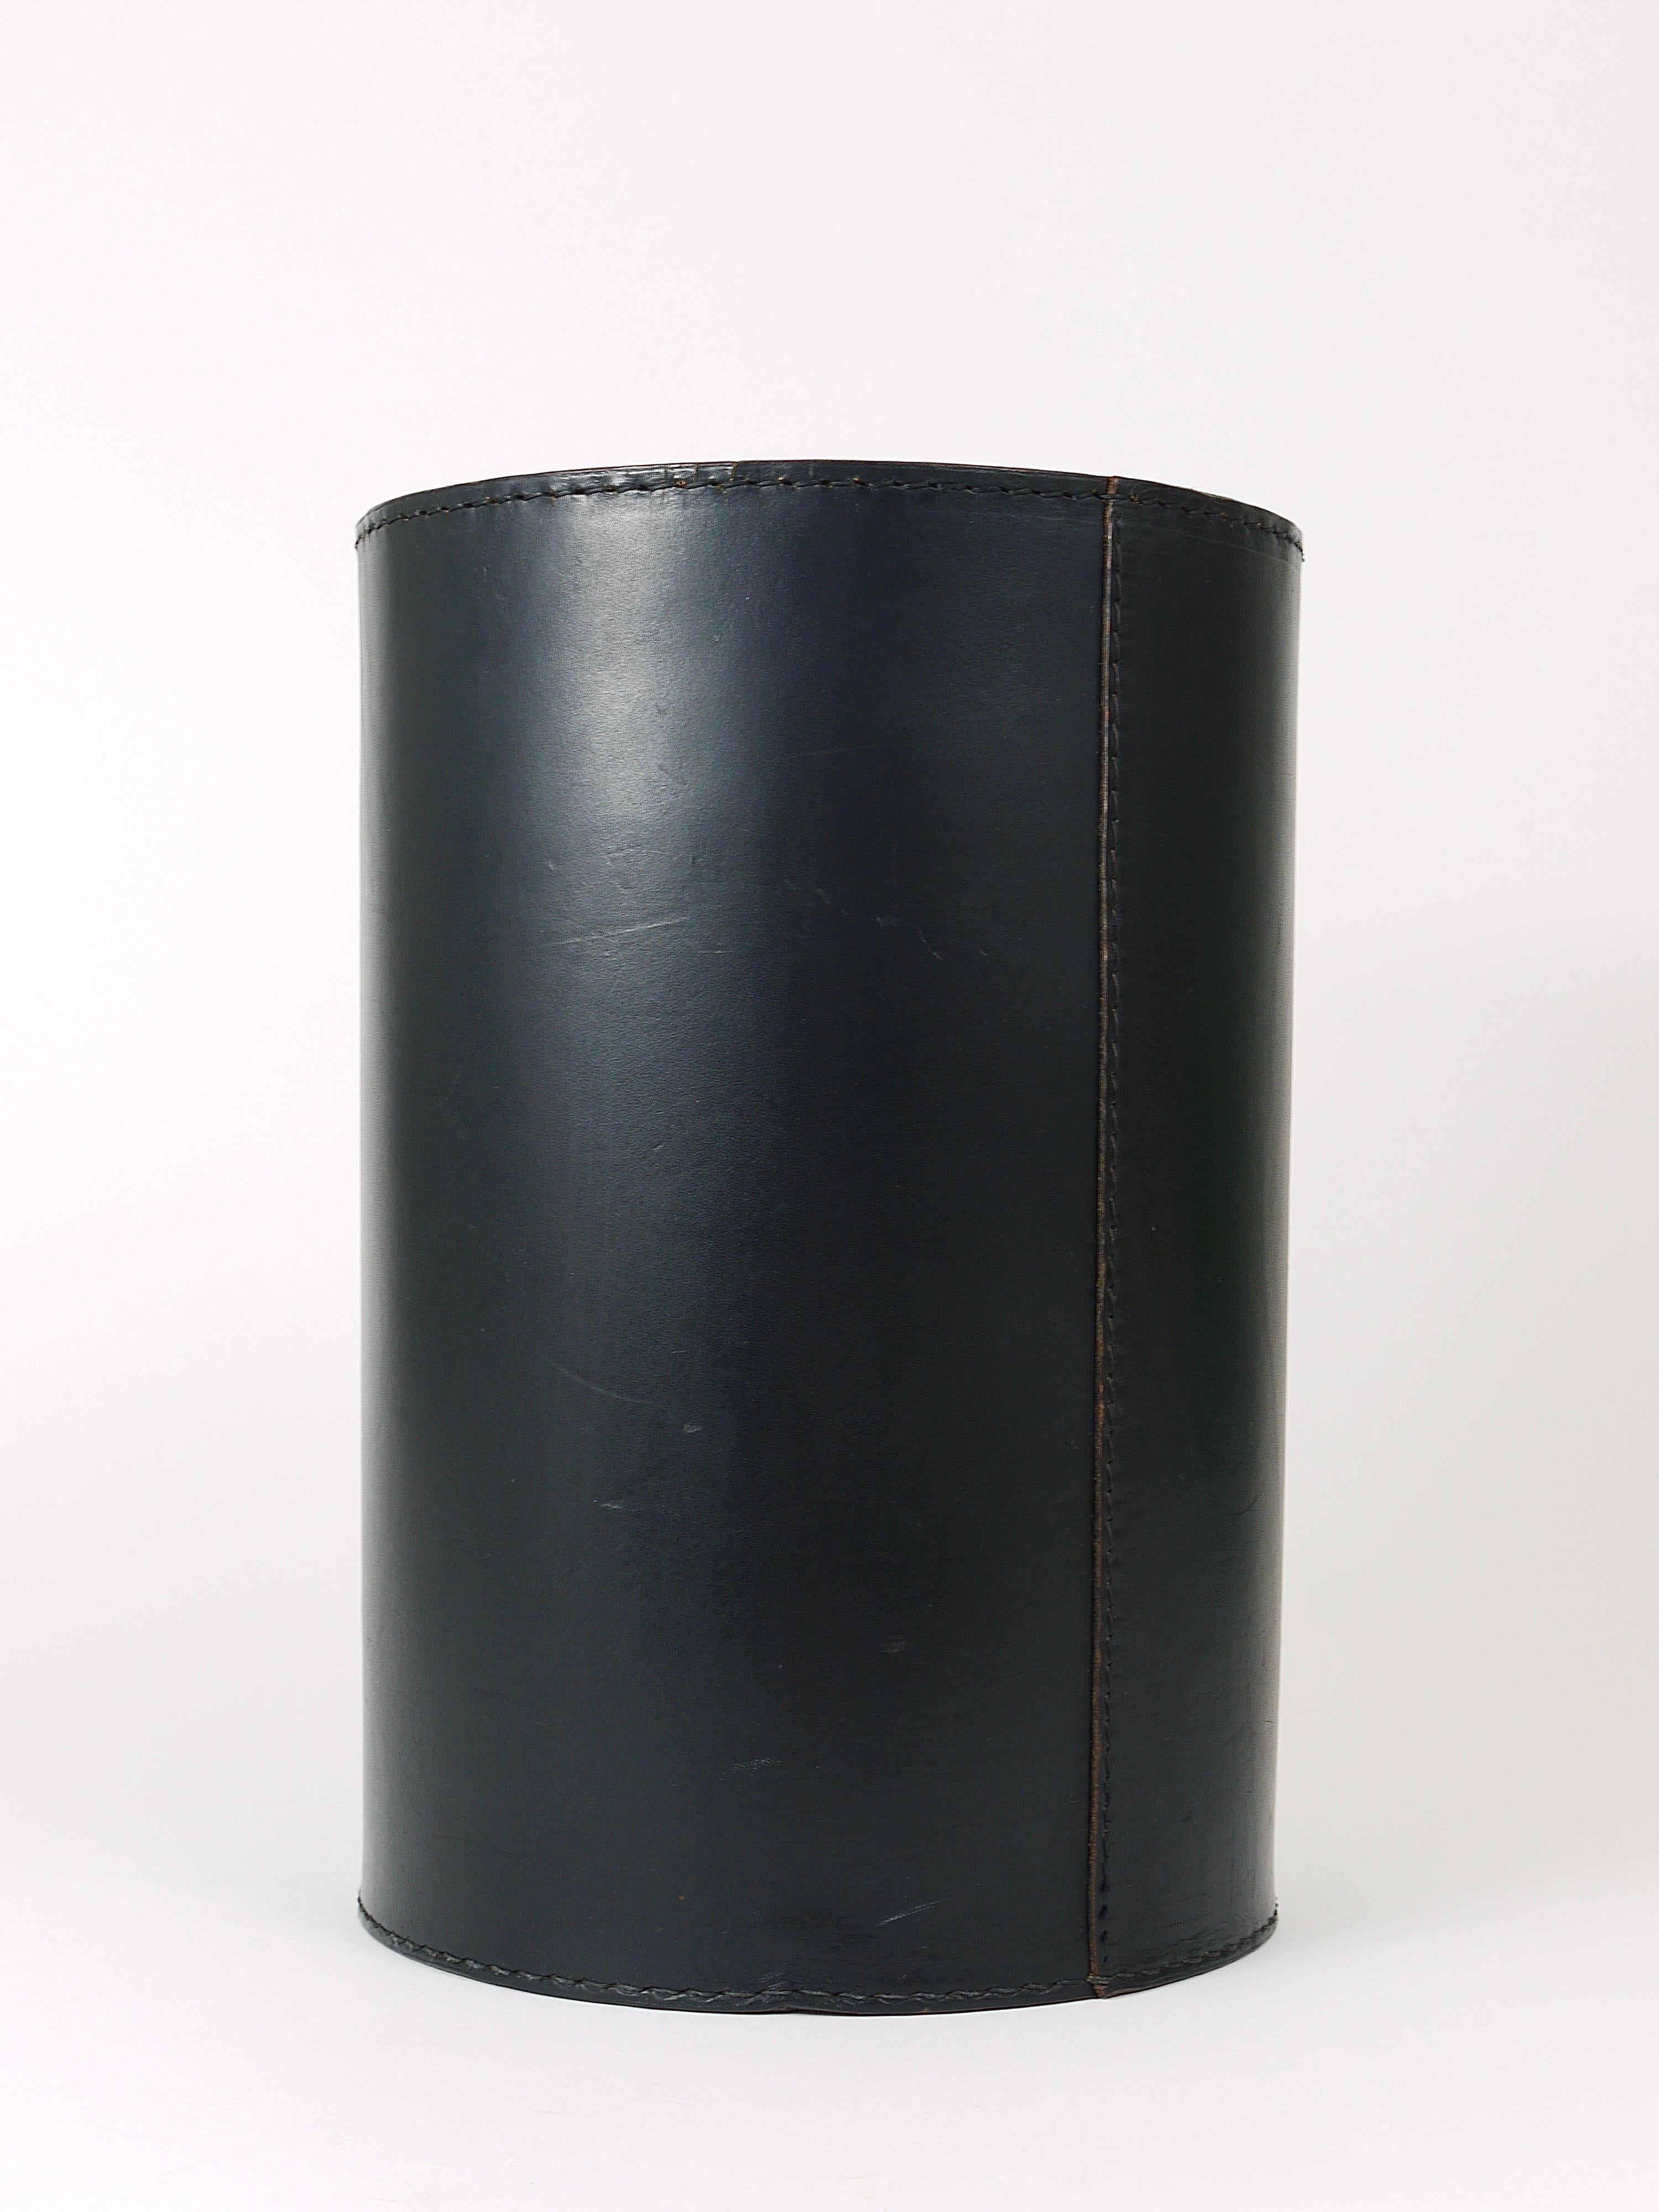 20th Century Midcentury Carl Auböck Black Leather Wastepaper Basket, Austria, 1950s